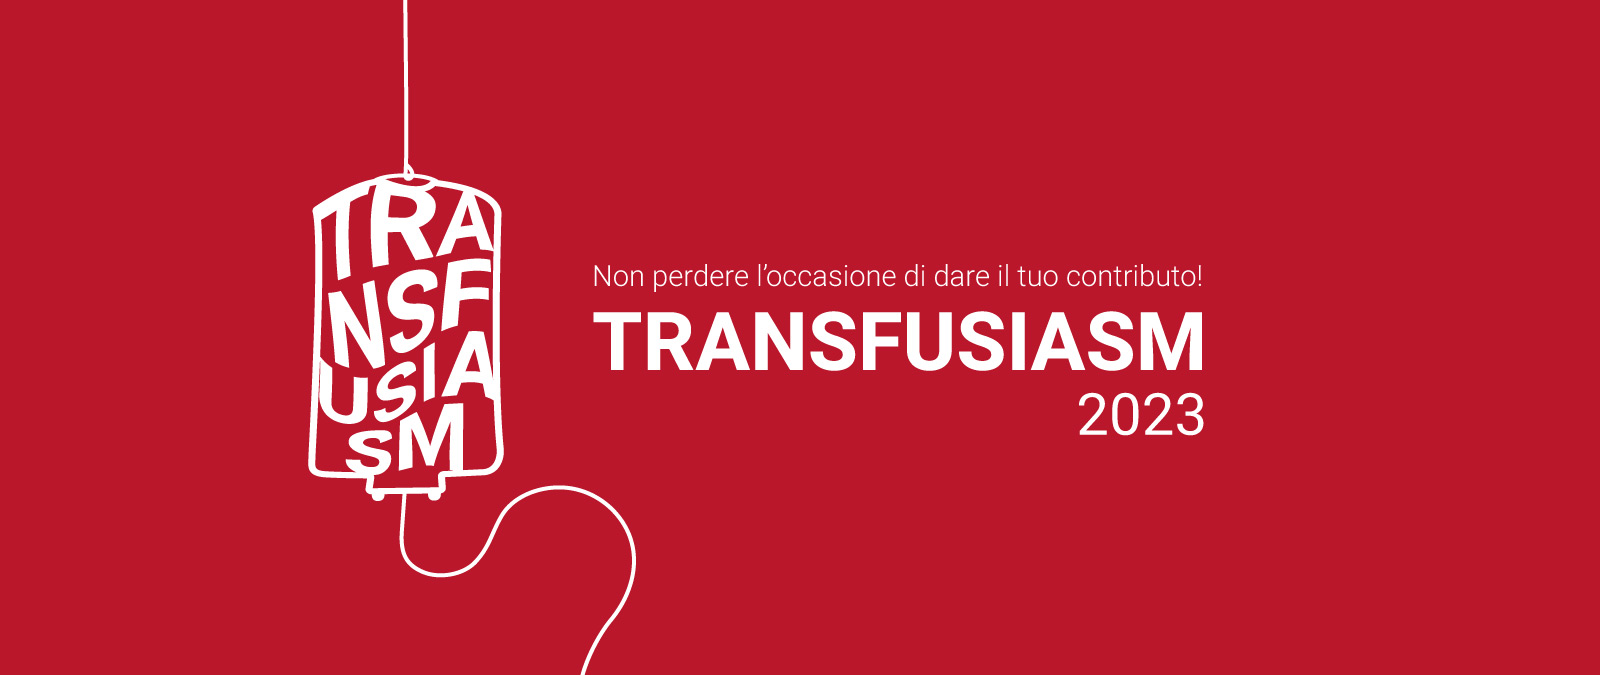 Transfusiasm: partecipa anche tu all'evento!